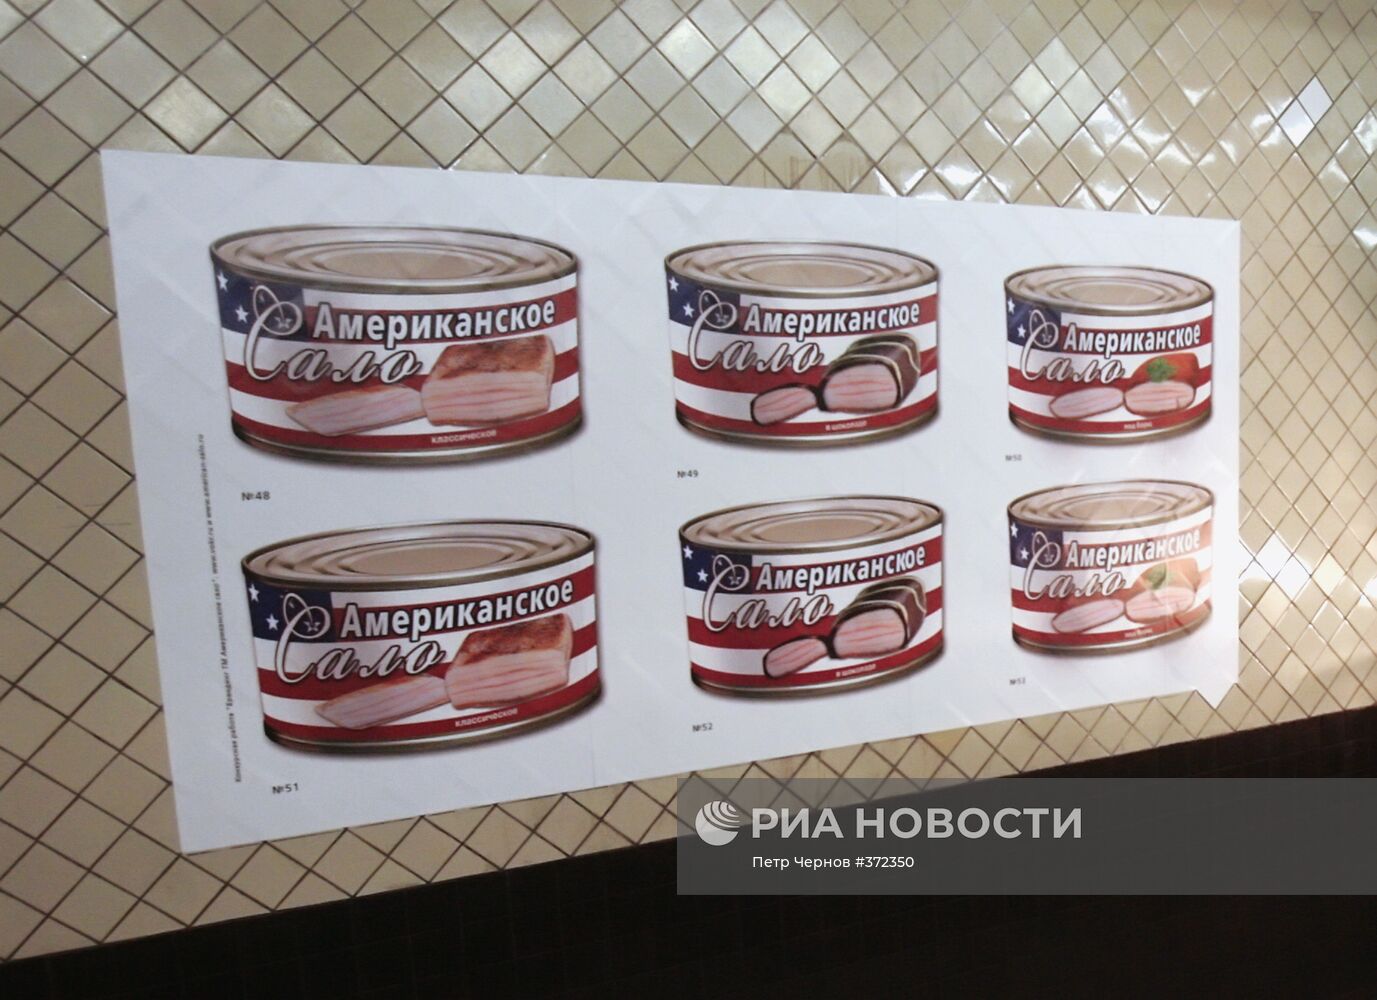 Реклама "Американского сала" в метро